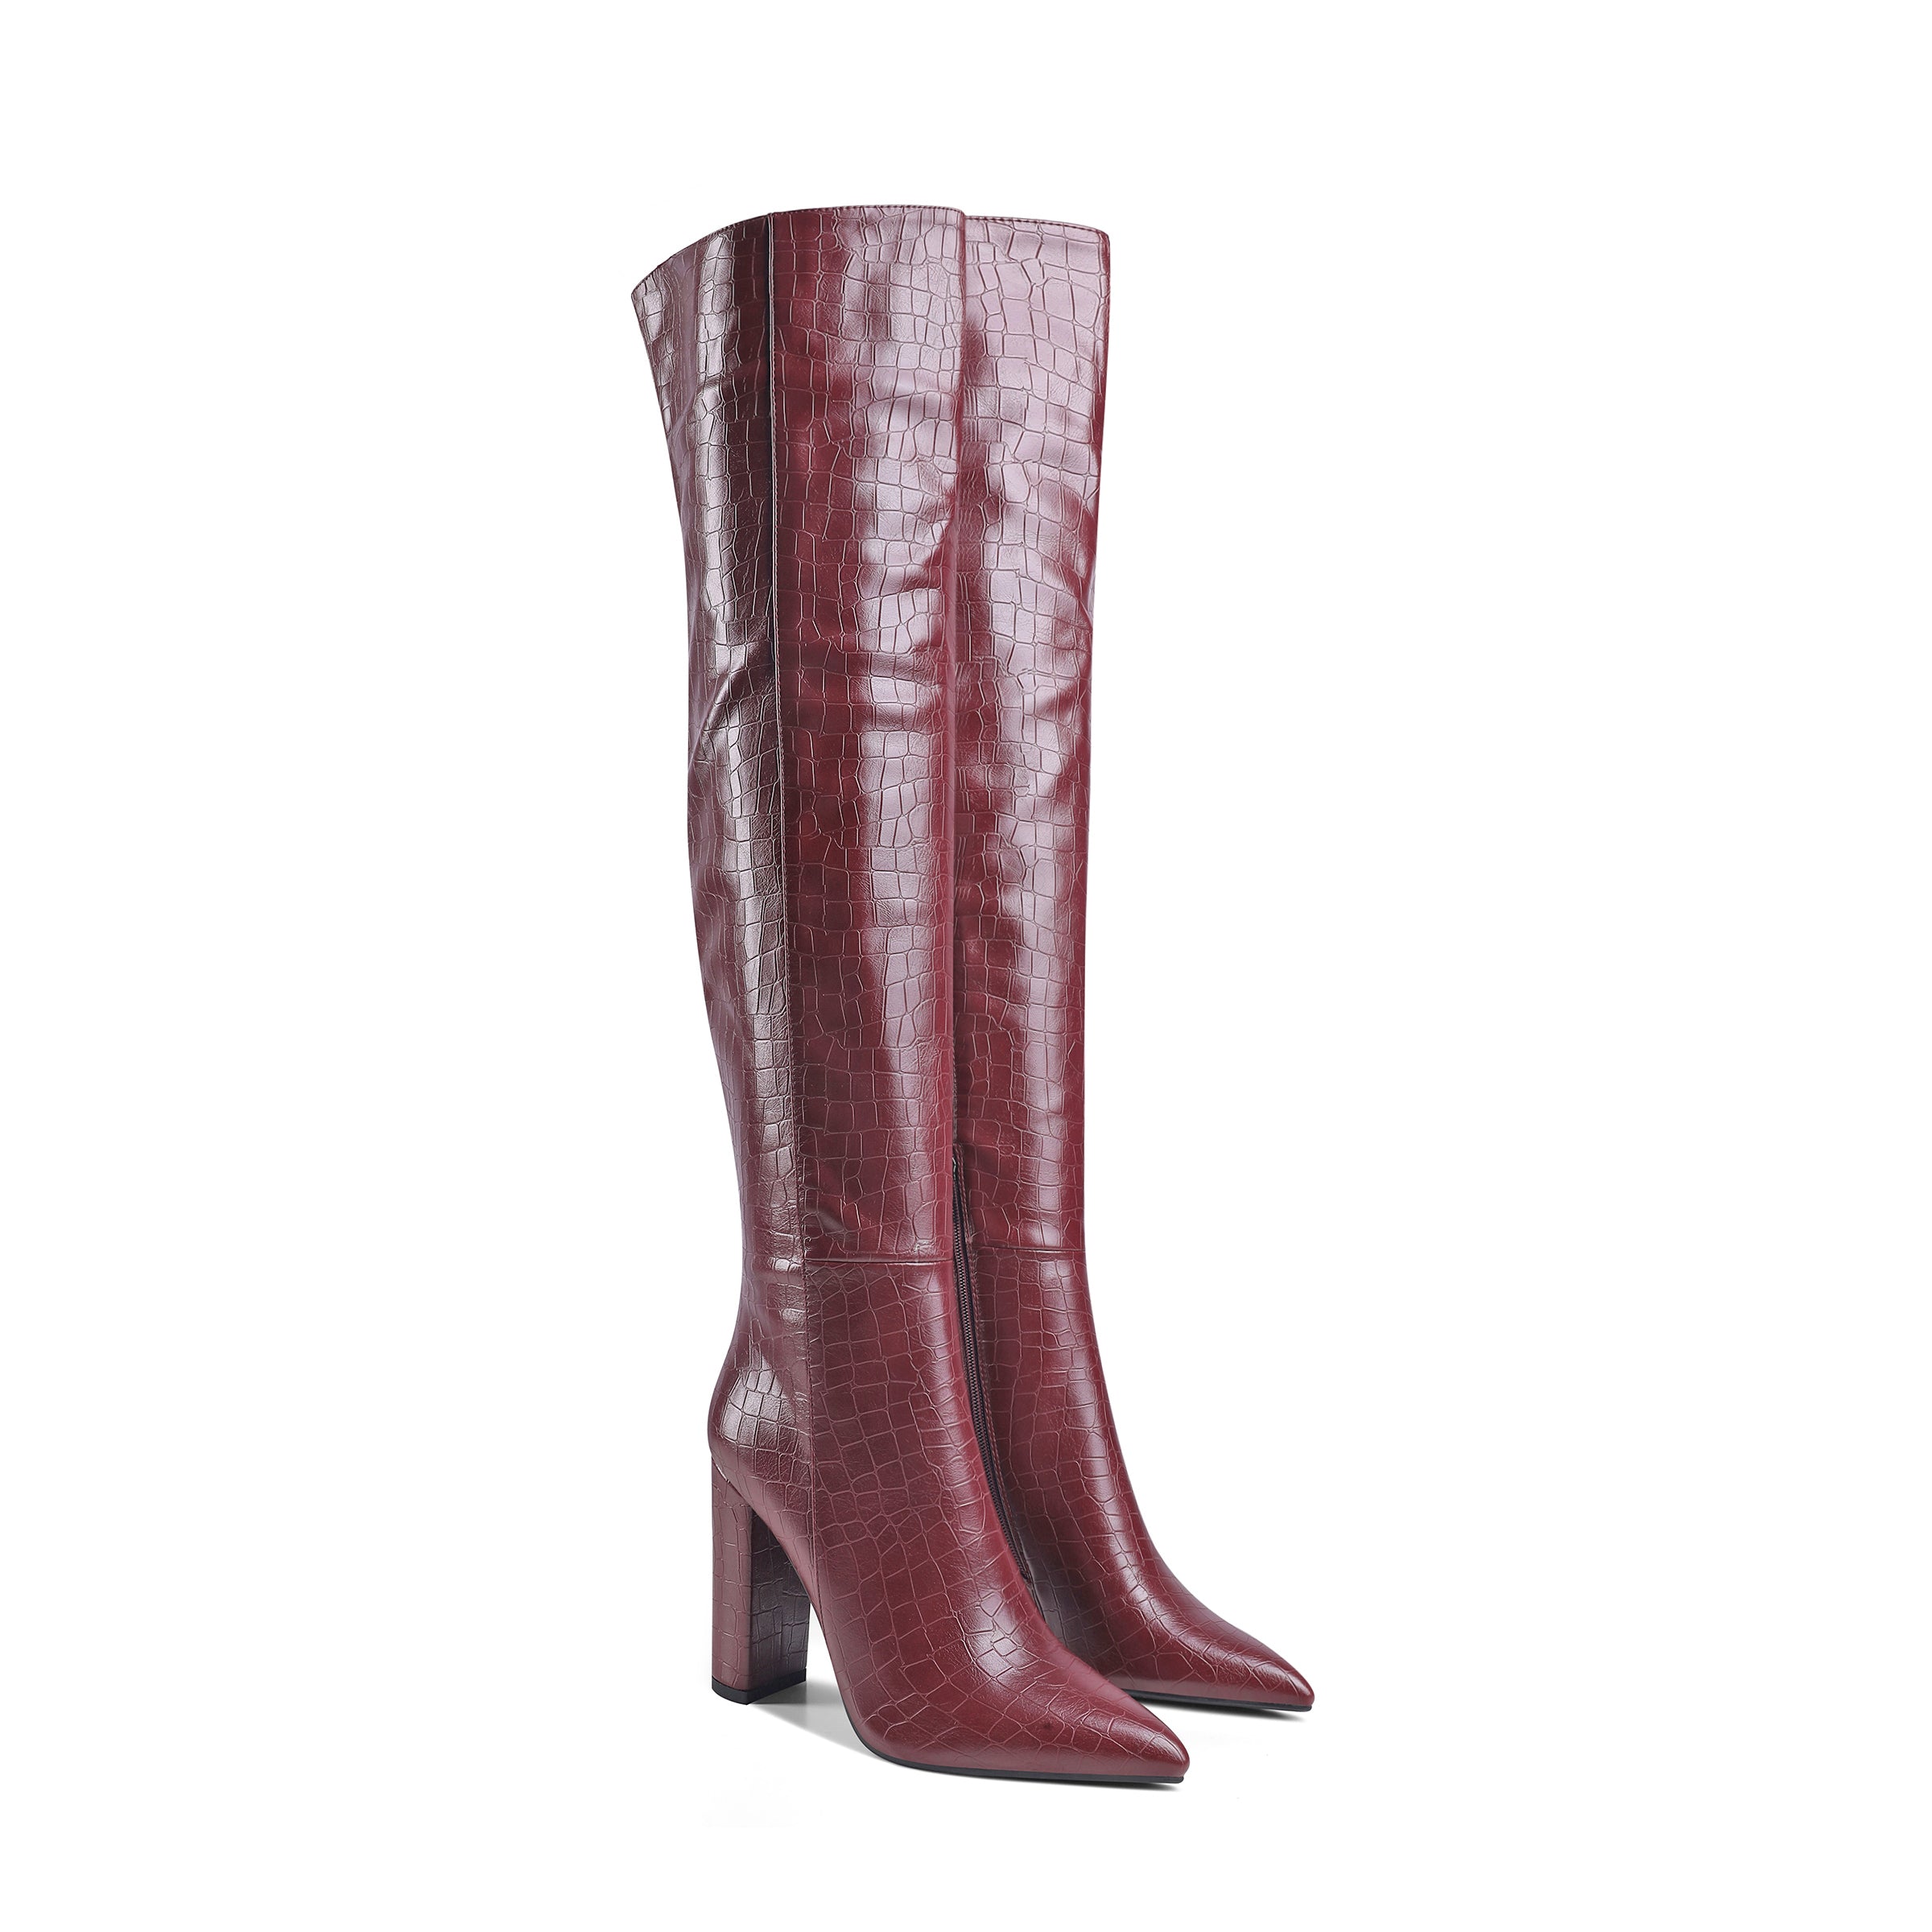 Bigsizeheels Embossed leather pointed toe chunky heel boots - Burgundy freeshipping - bigsizeheel®-size5-size15 -All Plus Sizes Available!